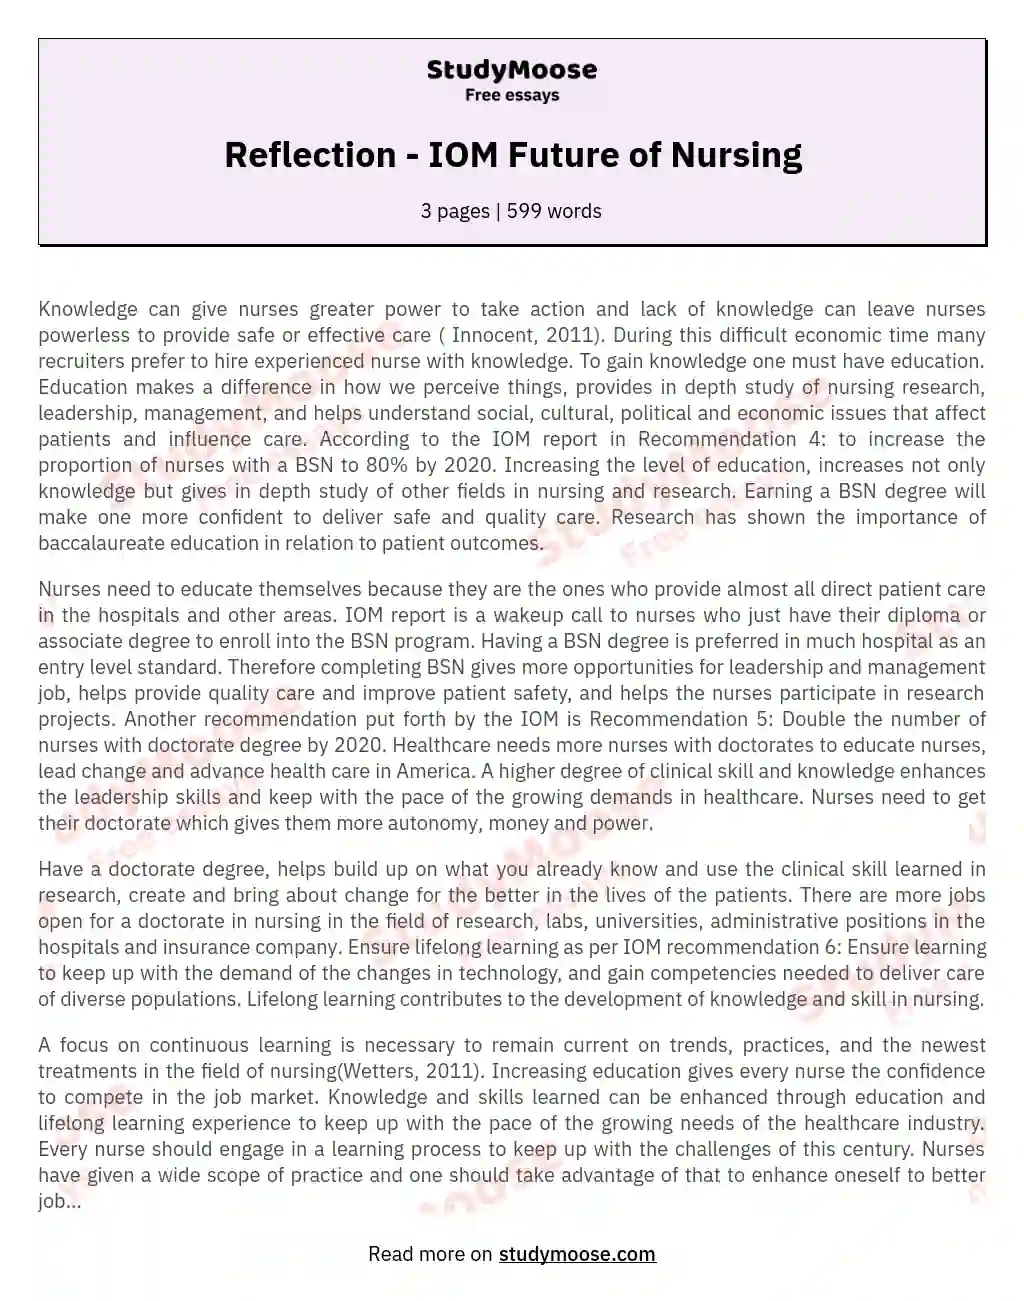 Reflection - IOM Future of Nursing essay